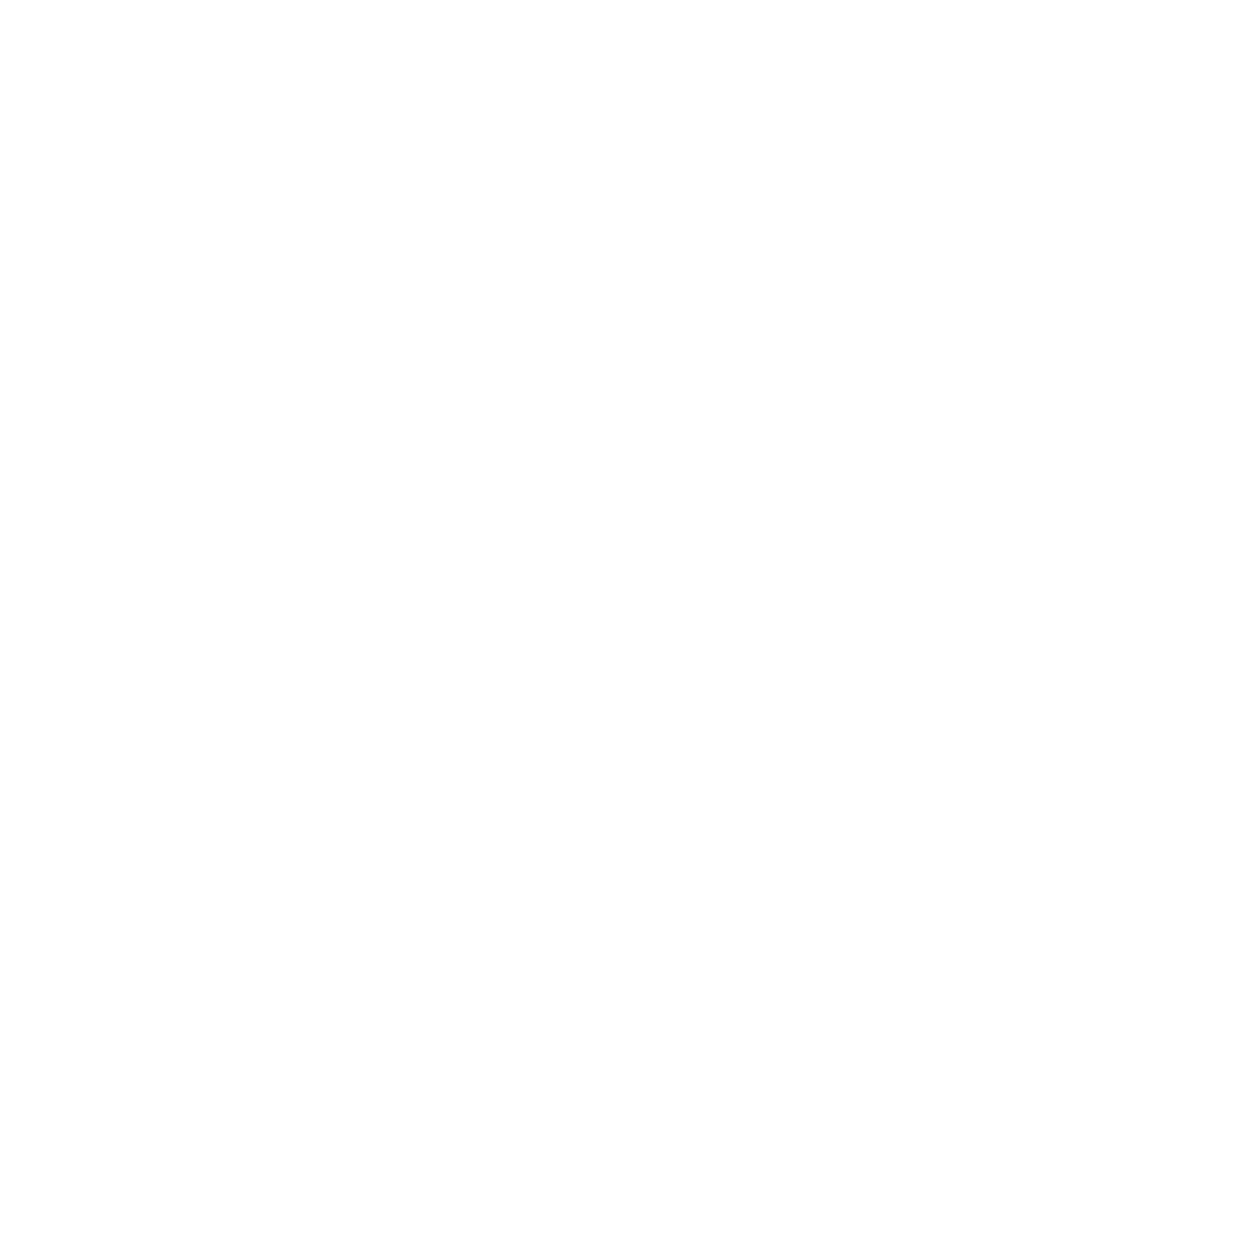 facebook white